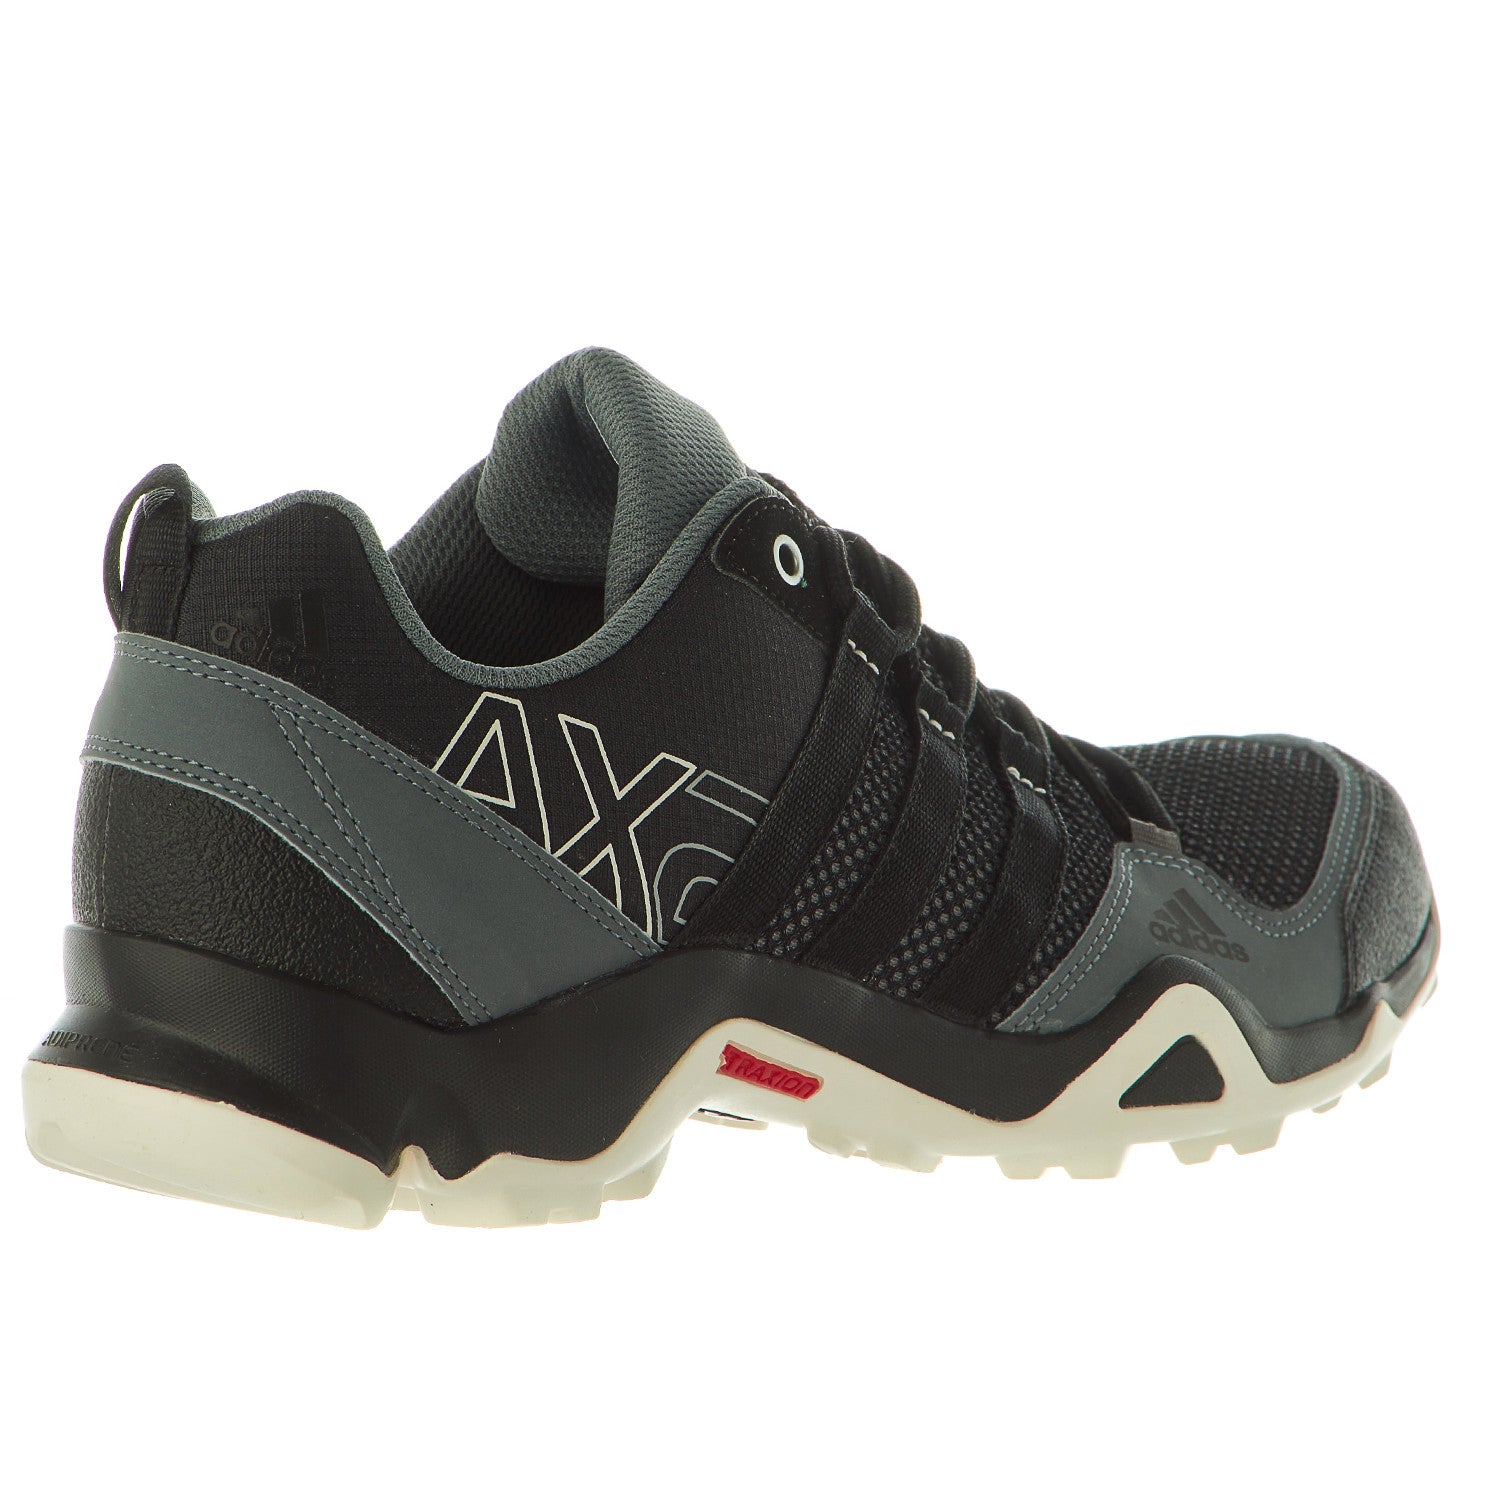 Adidas Outdoor AX2 Shoe - Men's -